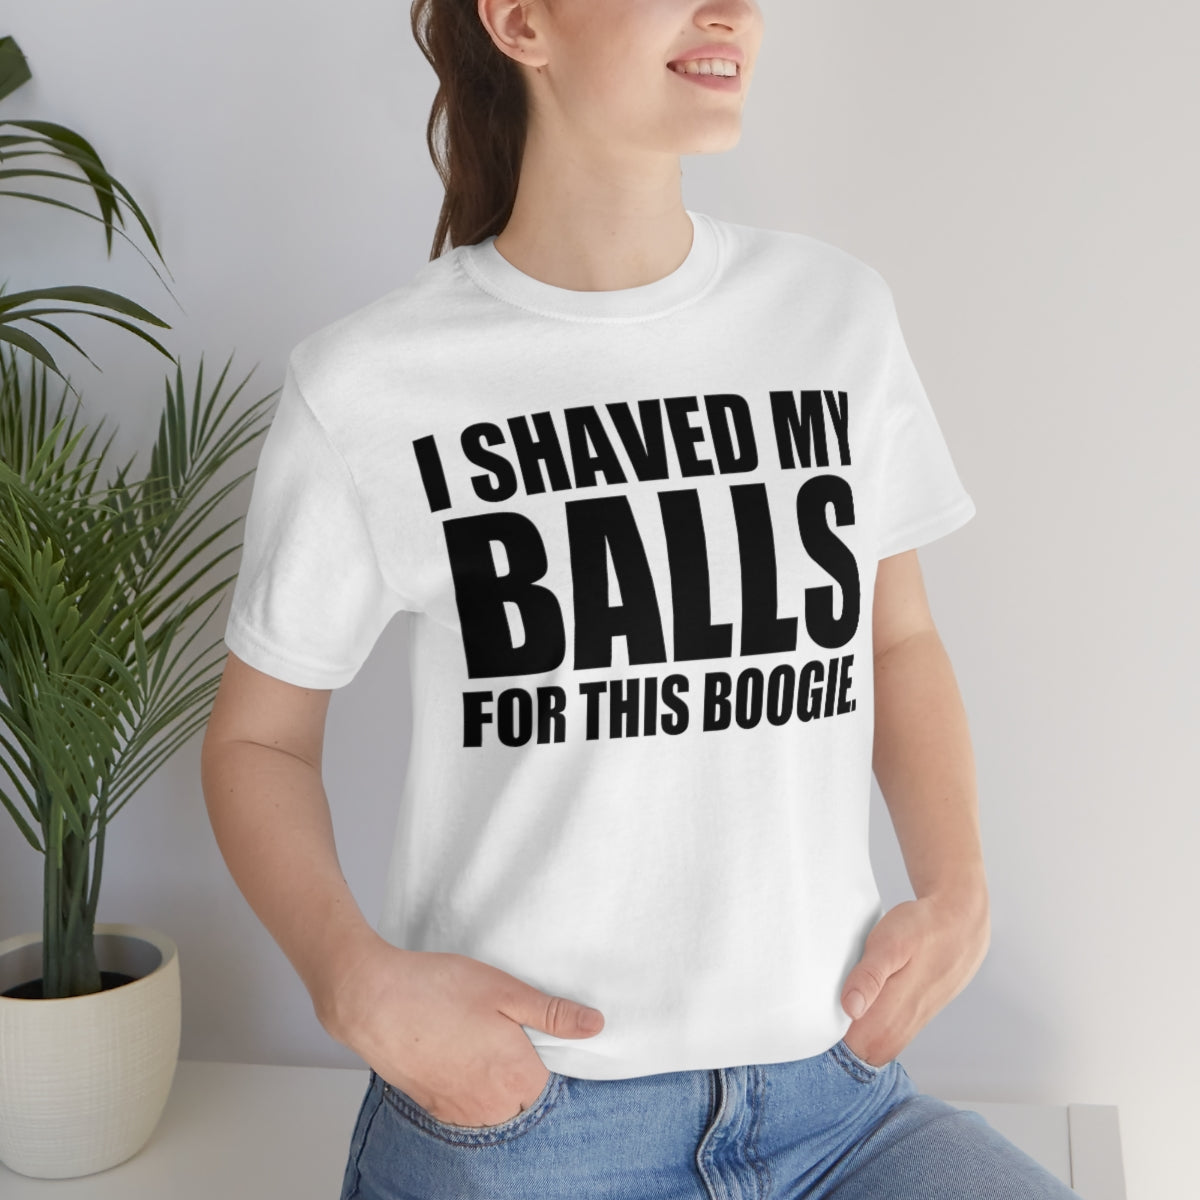 SHAVED BALLS T-Shirt